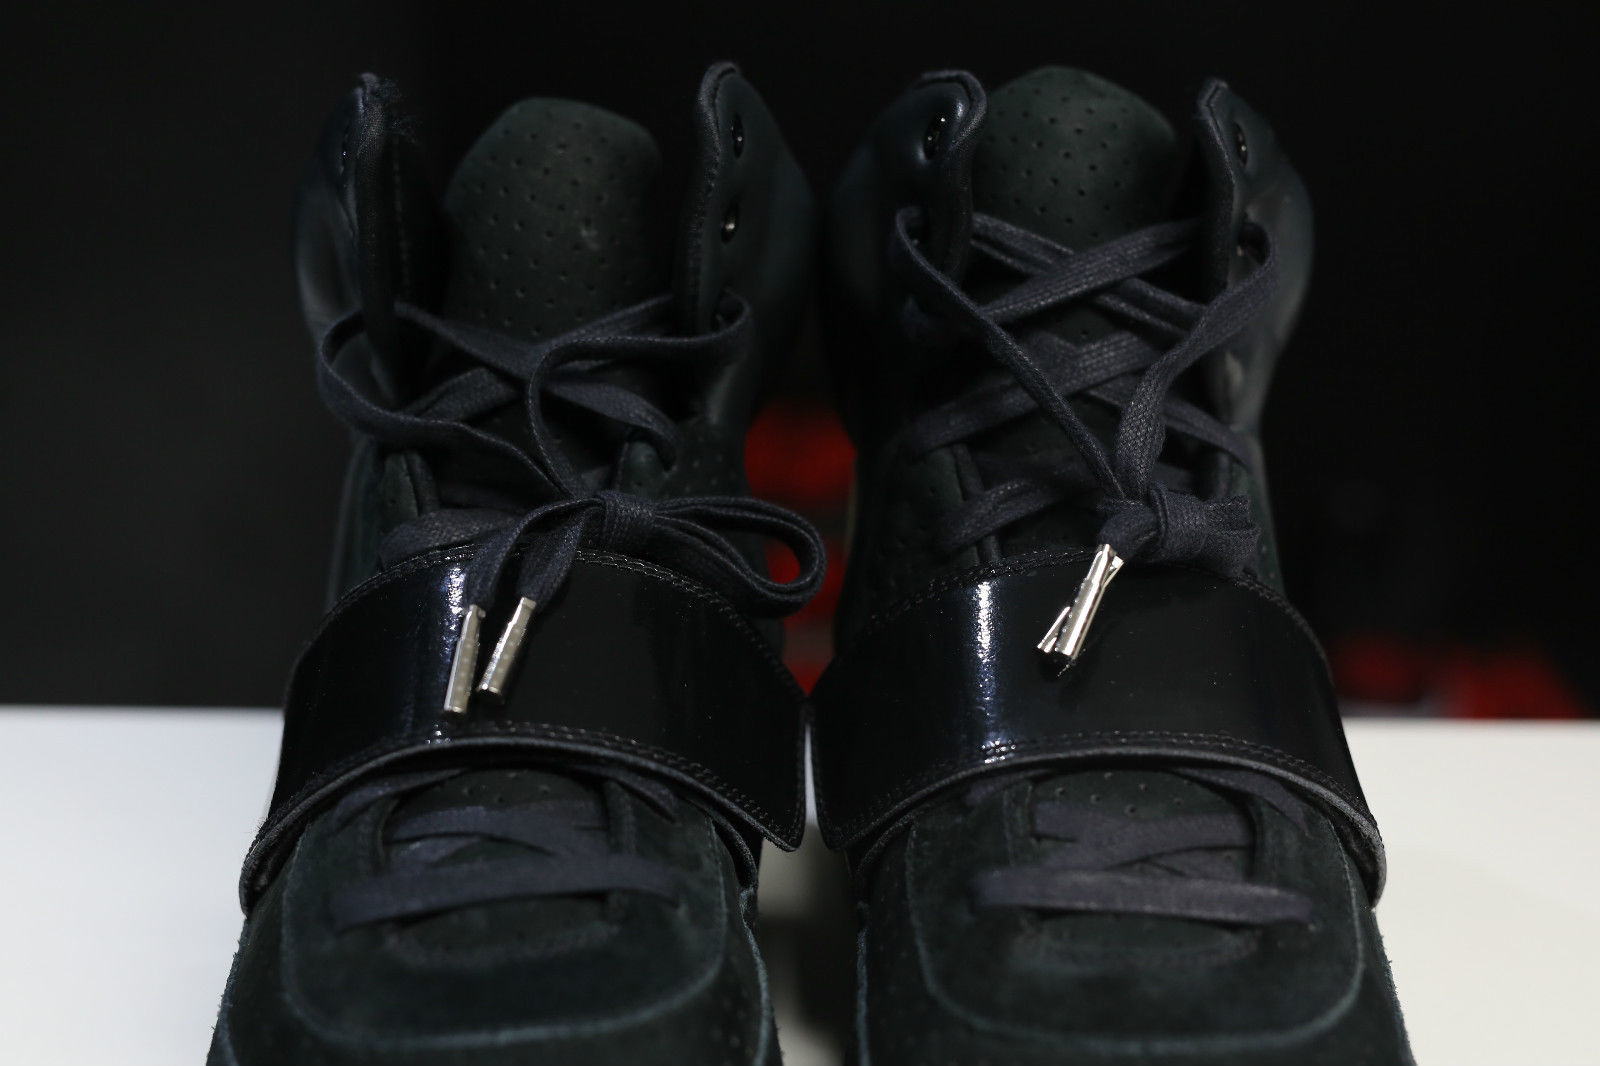 Nike Air Yeezy Kanye West Black/White Sample Pair Strap